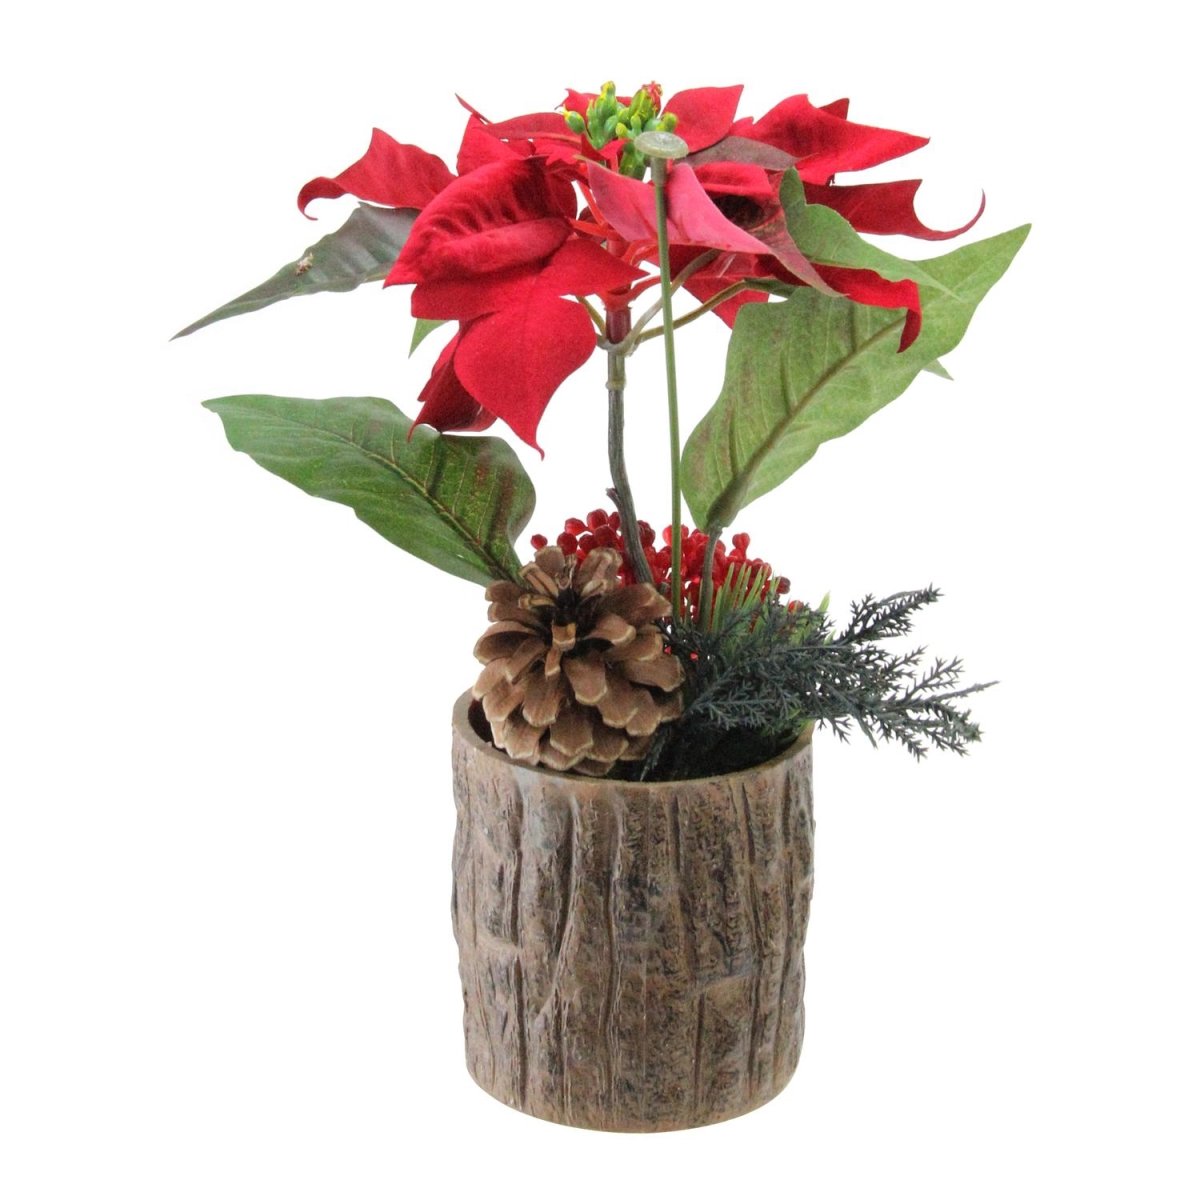 32626953 10 In. Artificial Poinsettia Decorative Potted Plant